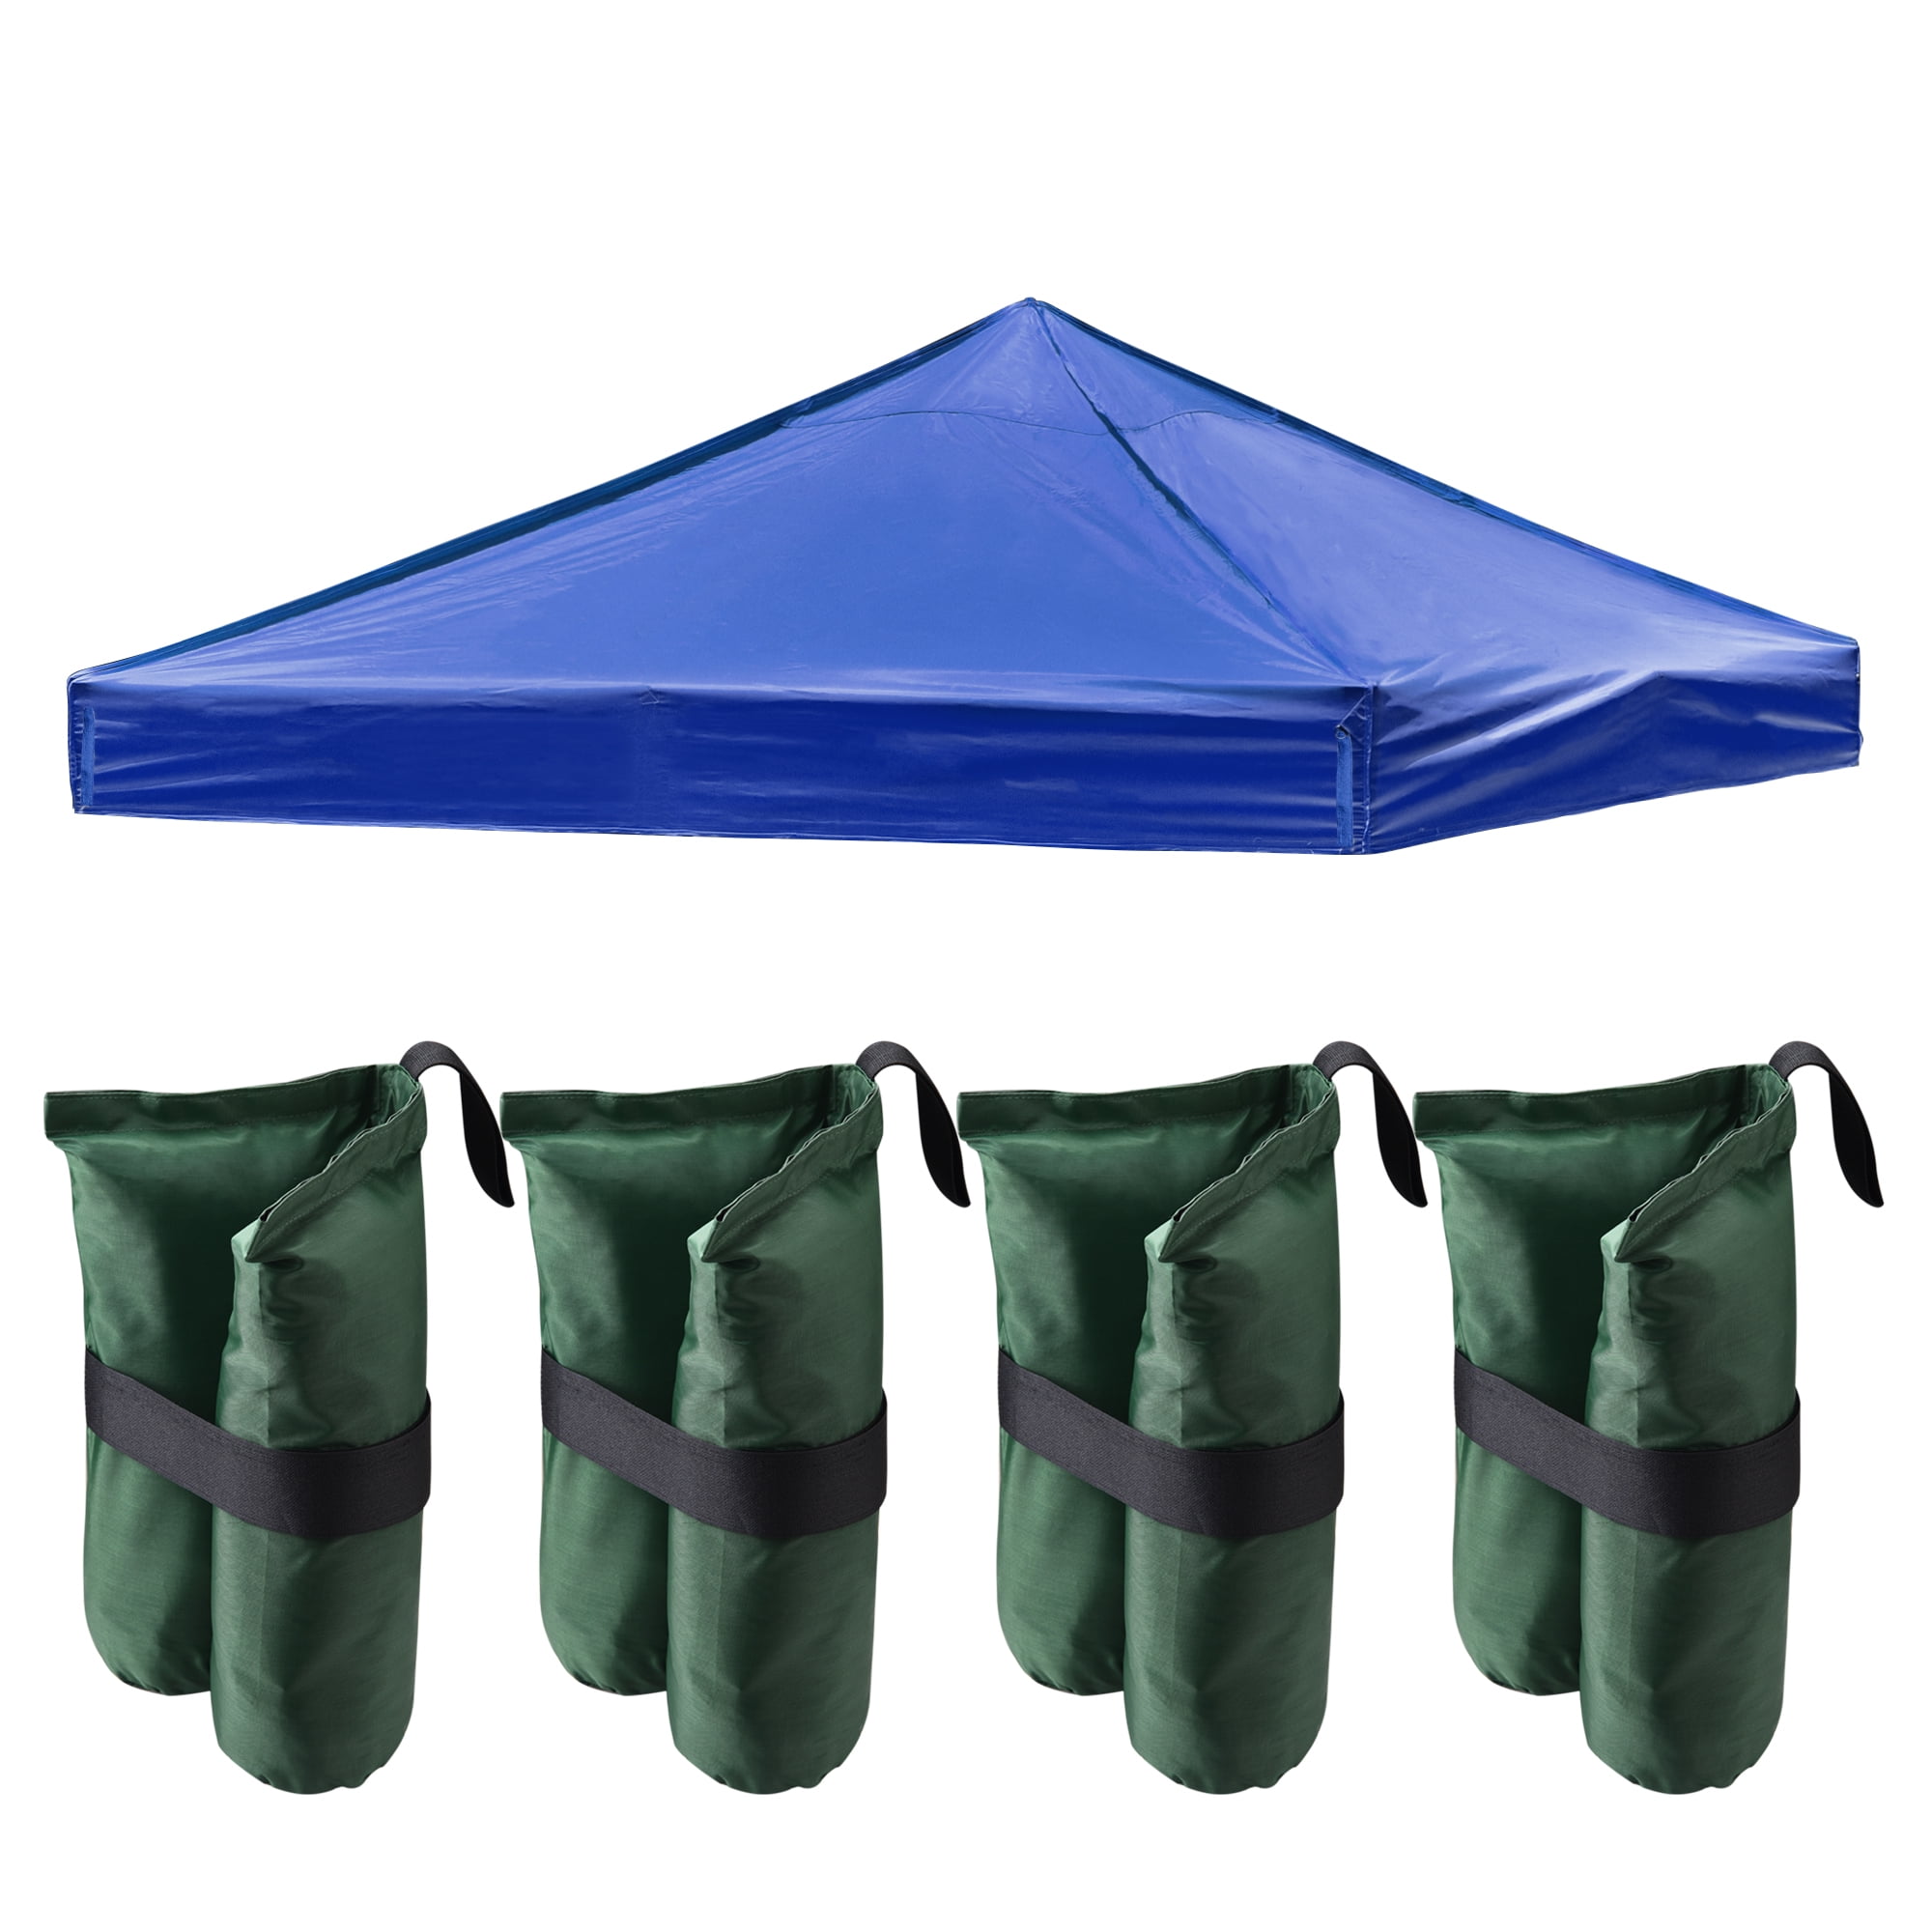 Camping Tent Pole Storage Bag Outdoor Canopy Awning Carry Bag Organizer Bag O3 